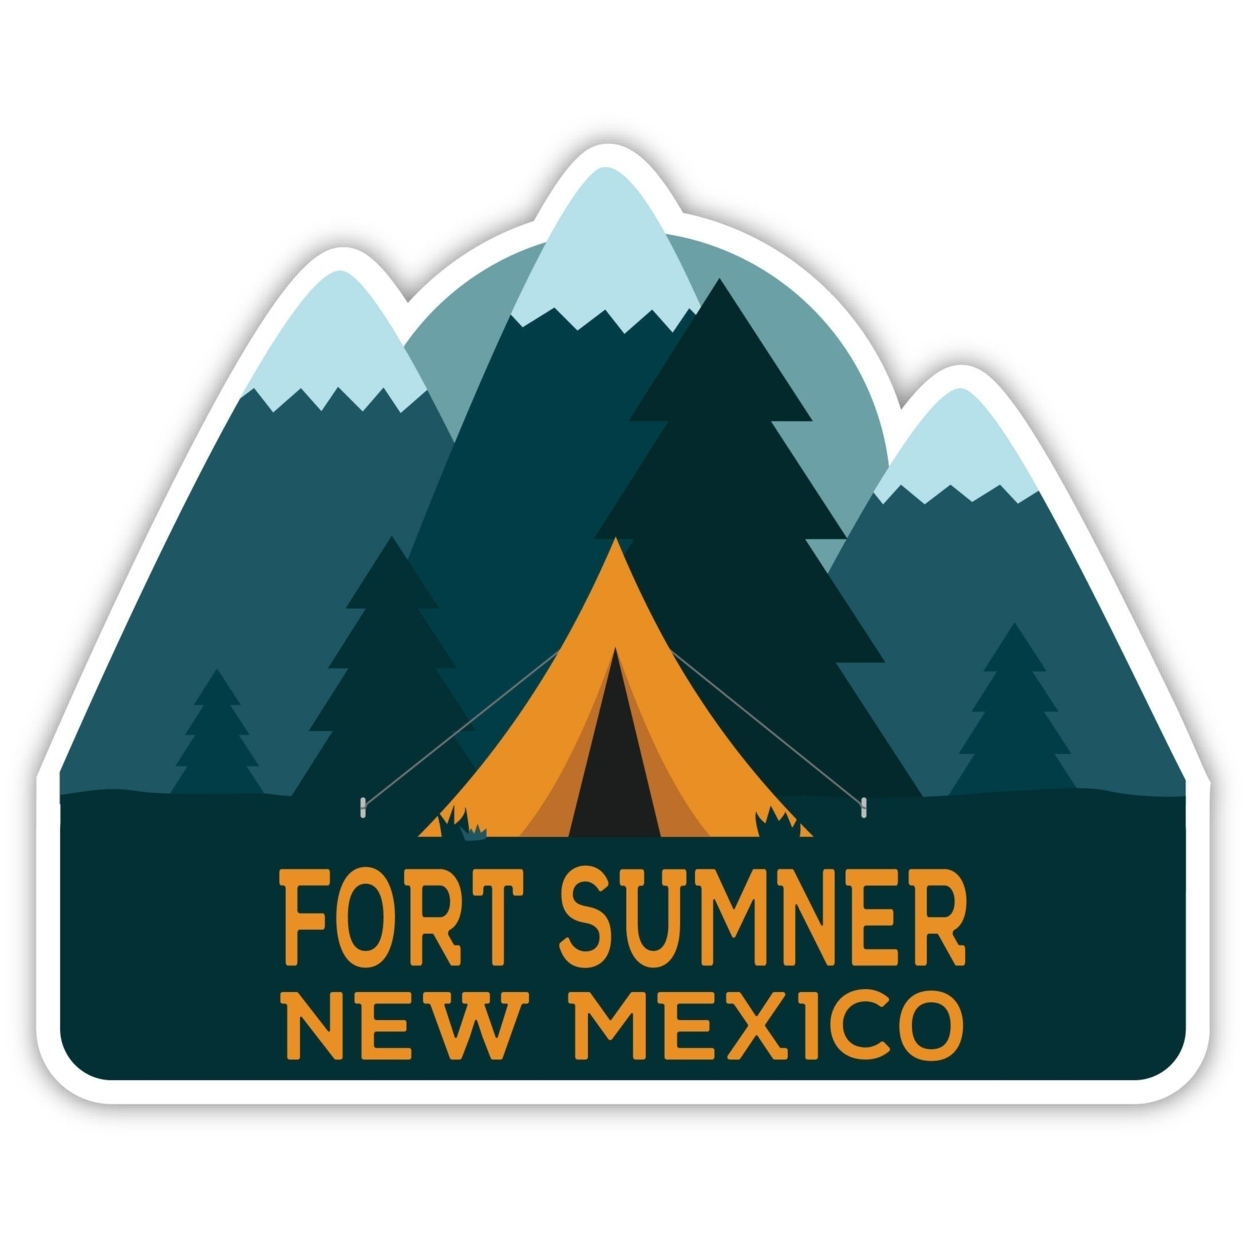 Fort Sumner New Mexico Souvenir Decorative Stickers (Choose Theme And Size) - Single Unit, 10-Inch, Tent